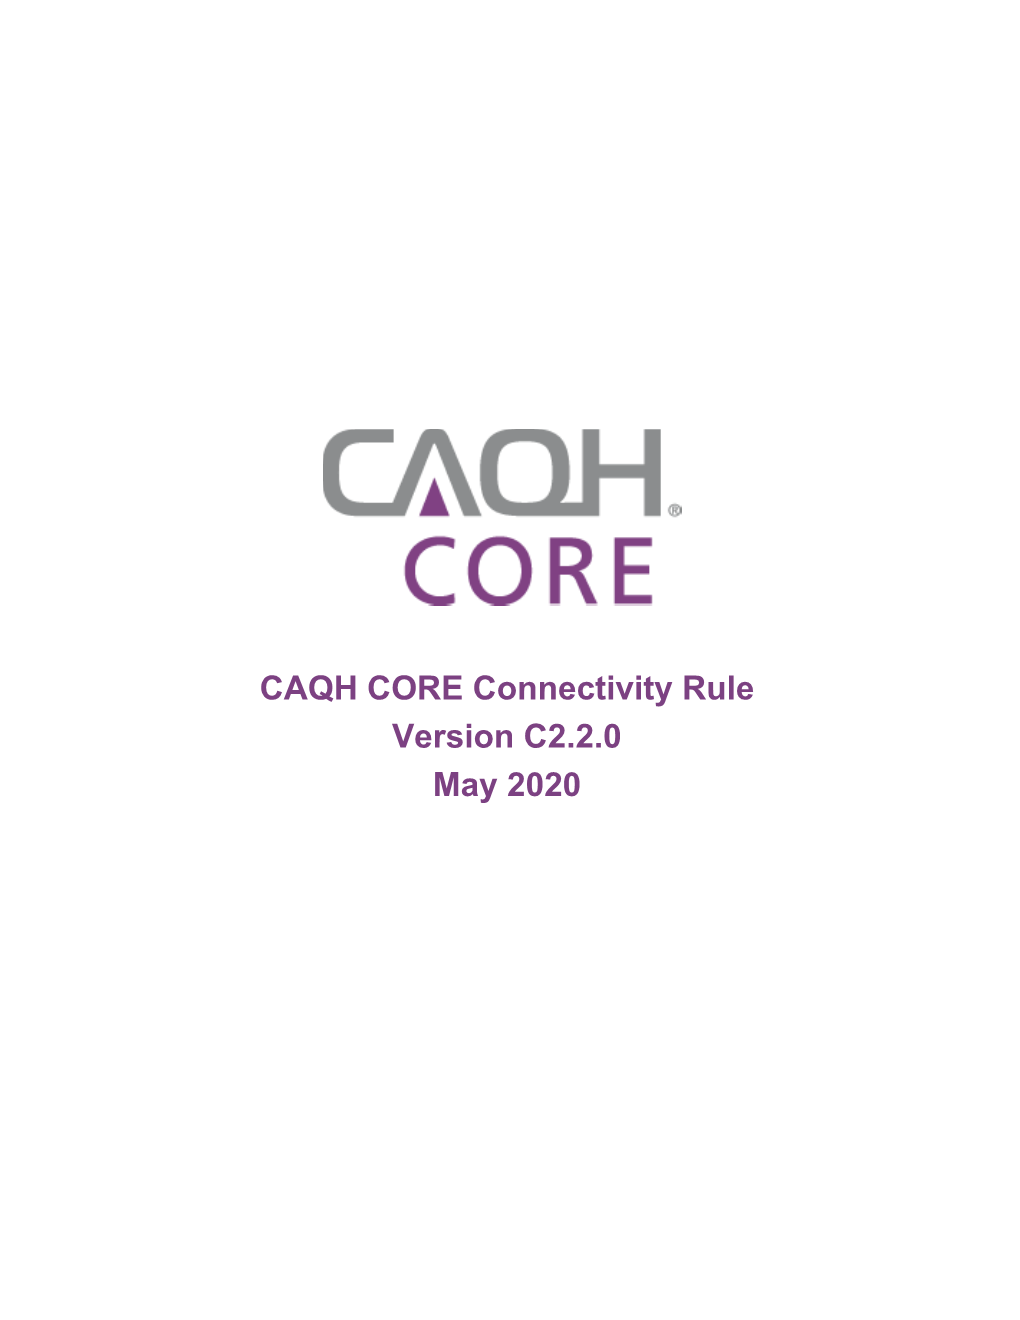 CAQH CORE Connectivity Rule Vc2.2.0